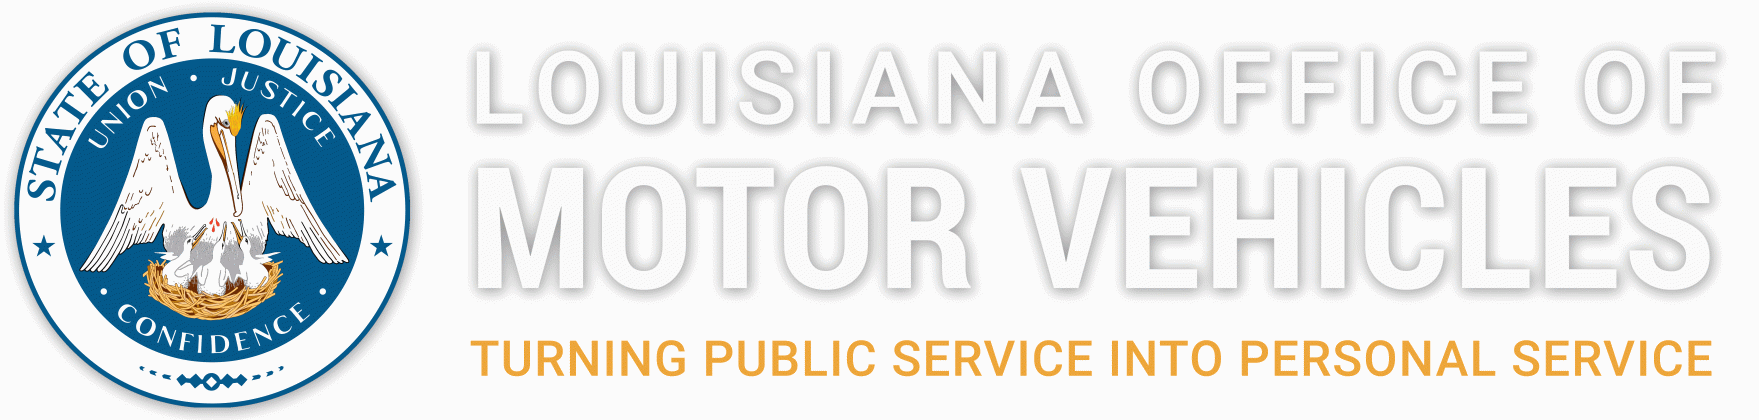 Louisiana Department of Motor Vehicles